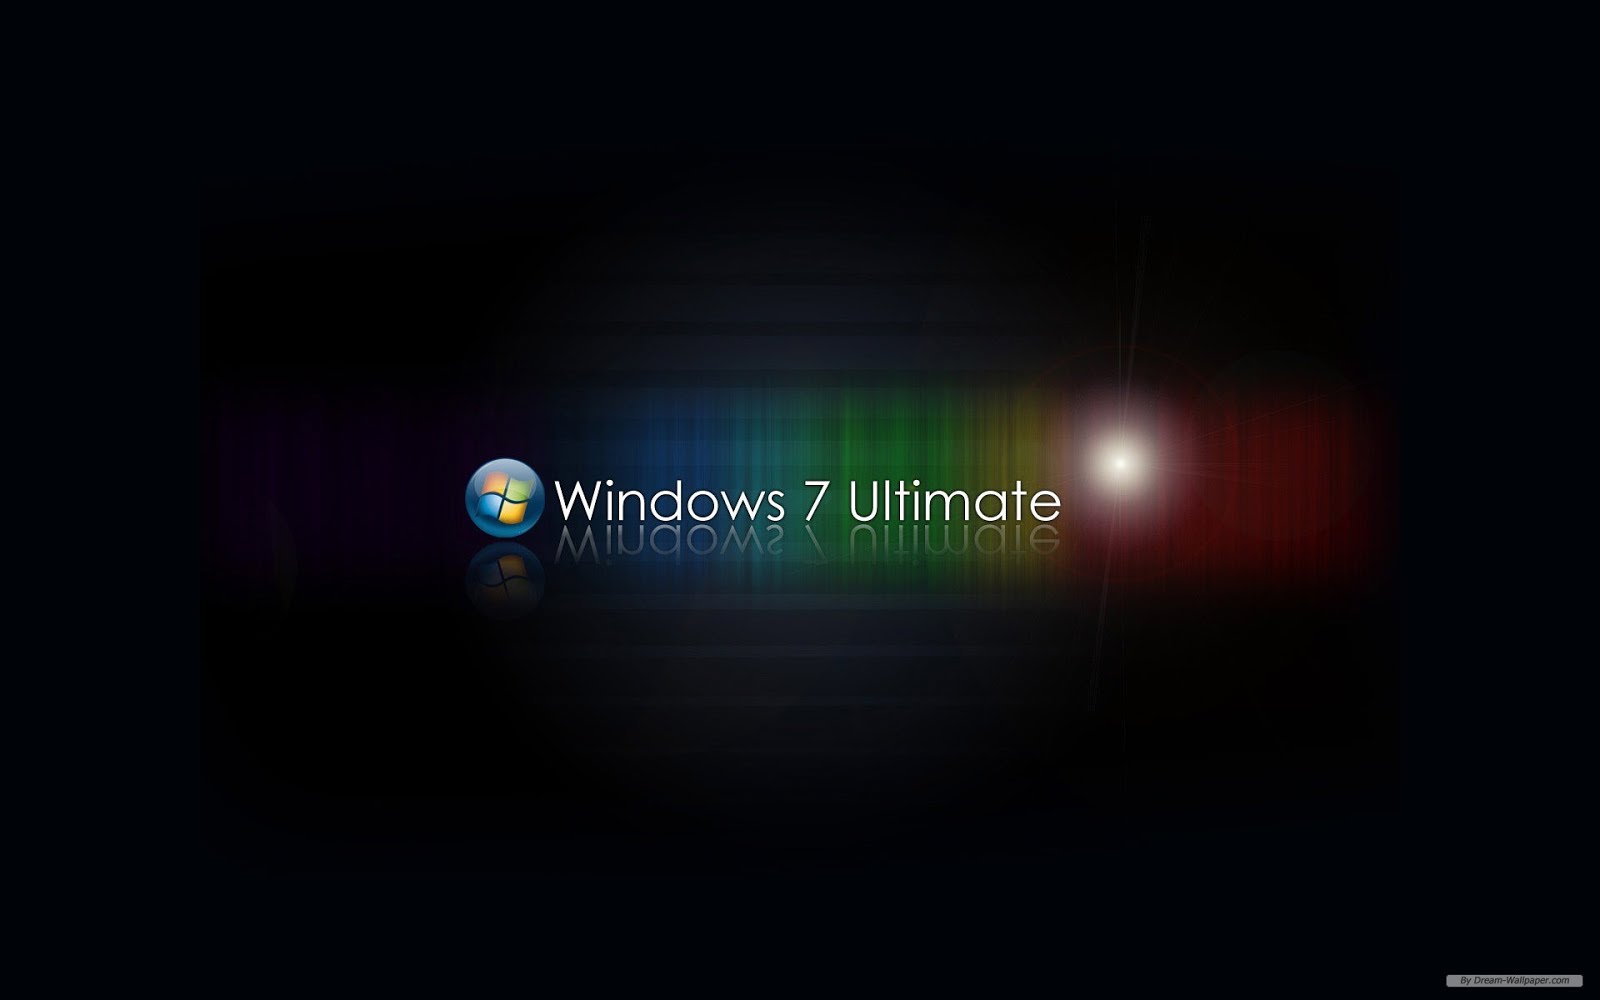 microsoft windows 7 ultimate 64 bit download iso free